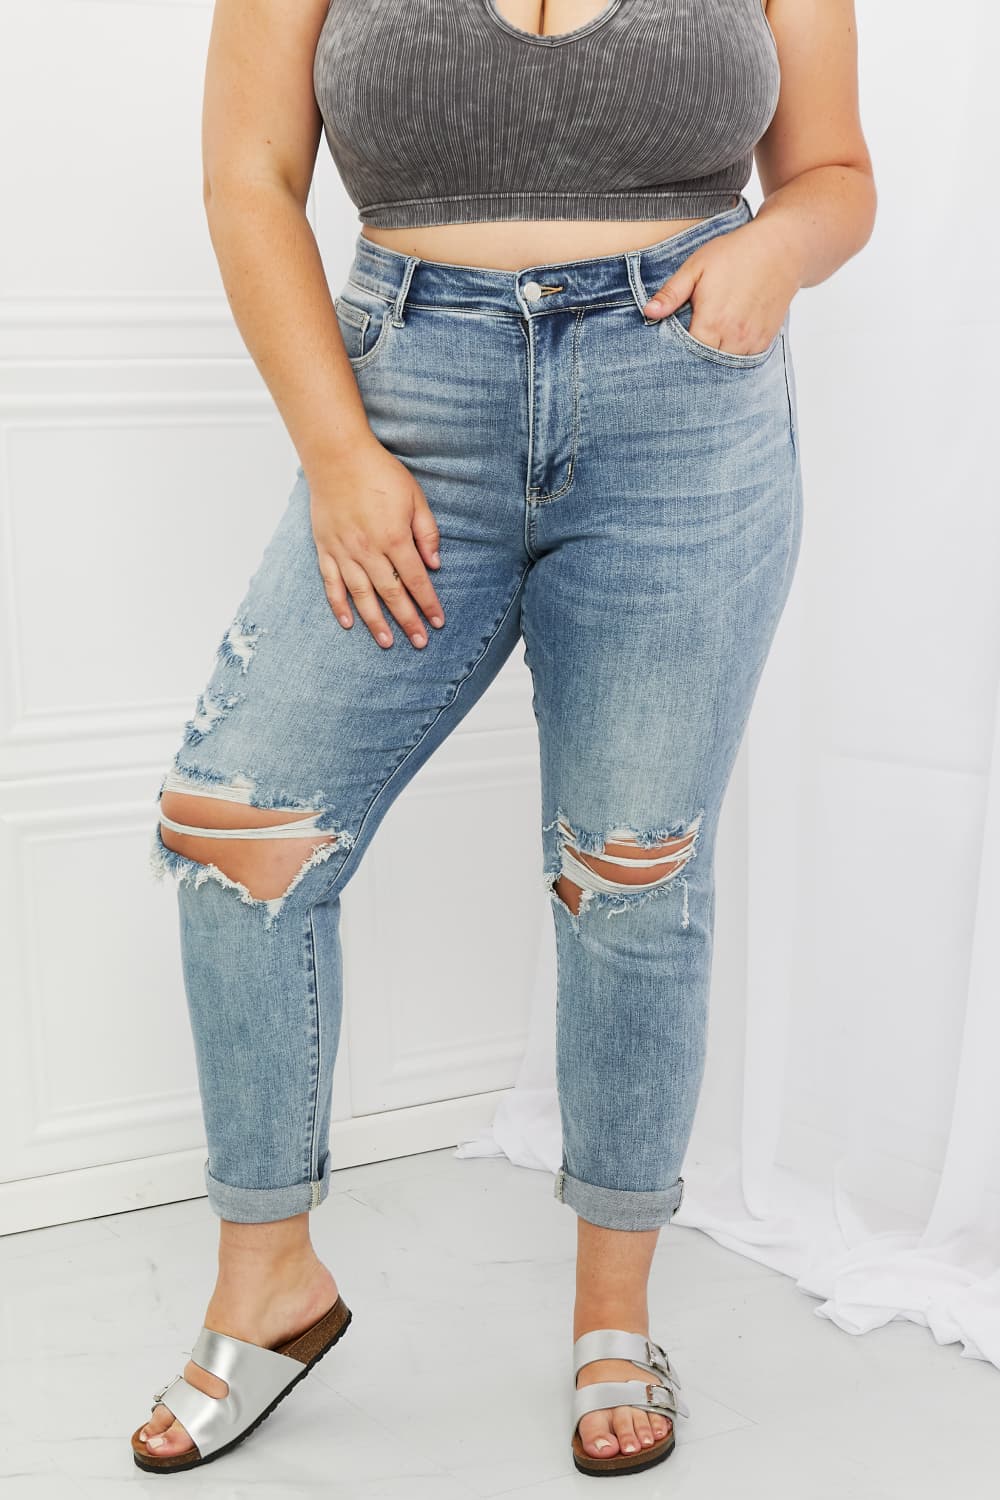 Plus Size, Judy Blue, Mid-Rise Ripped Double Cuff Boyfriend Jeans, 82458